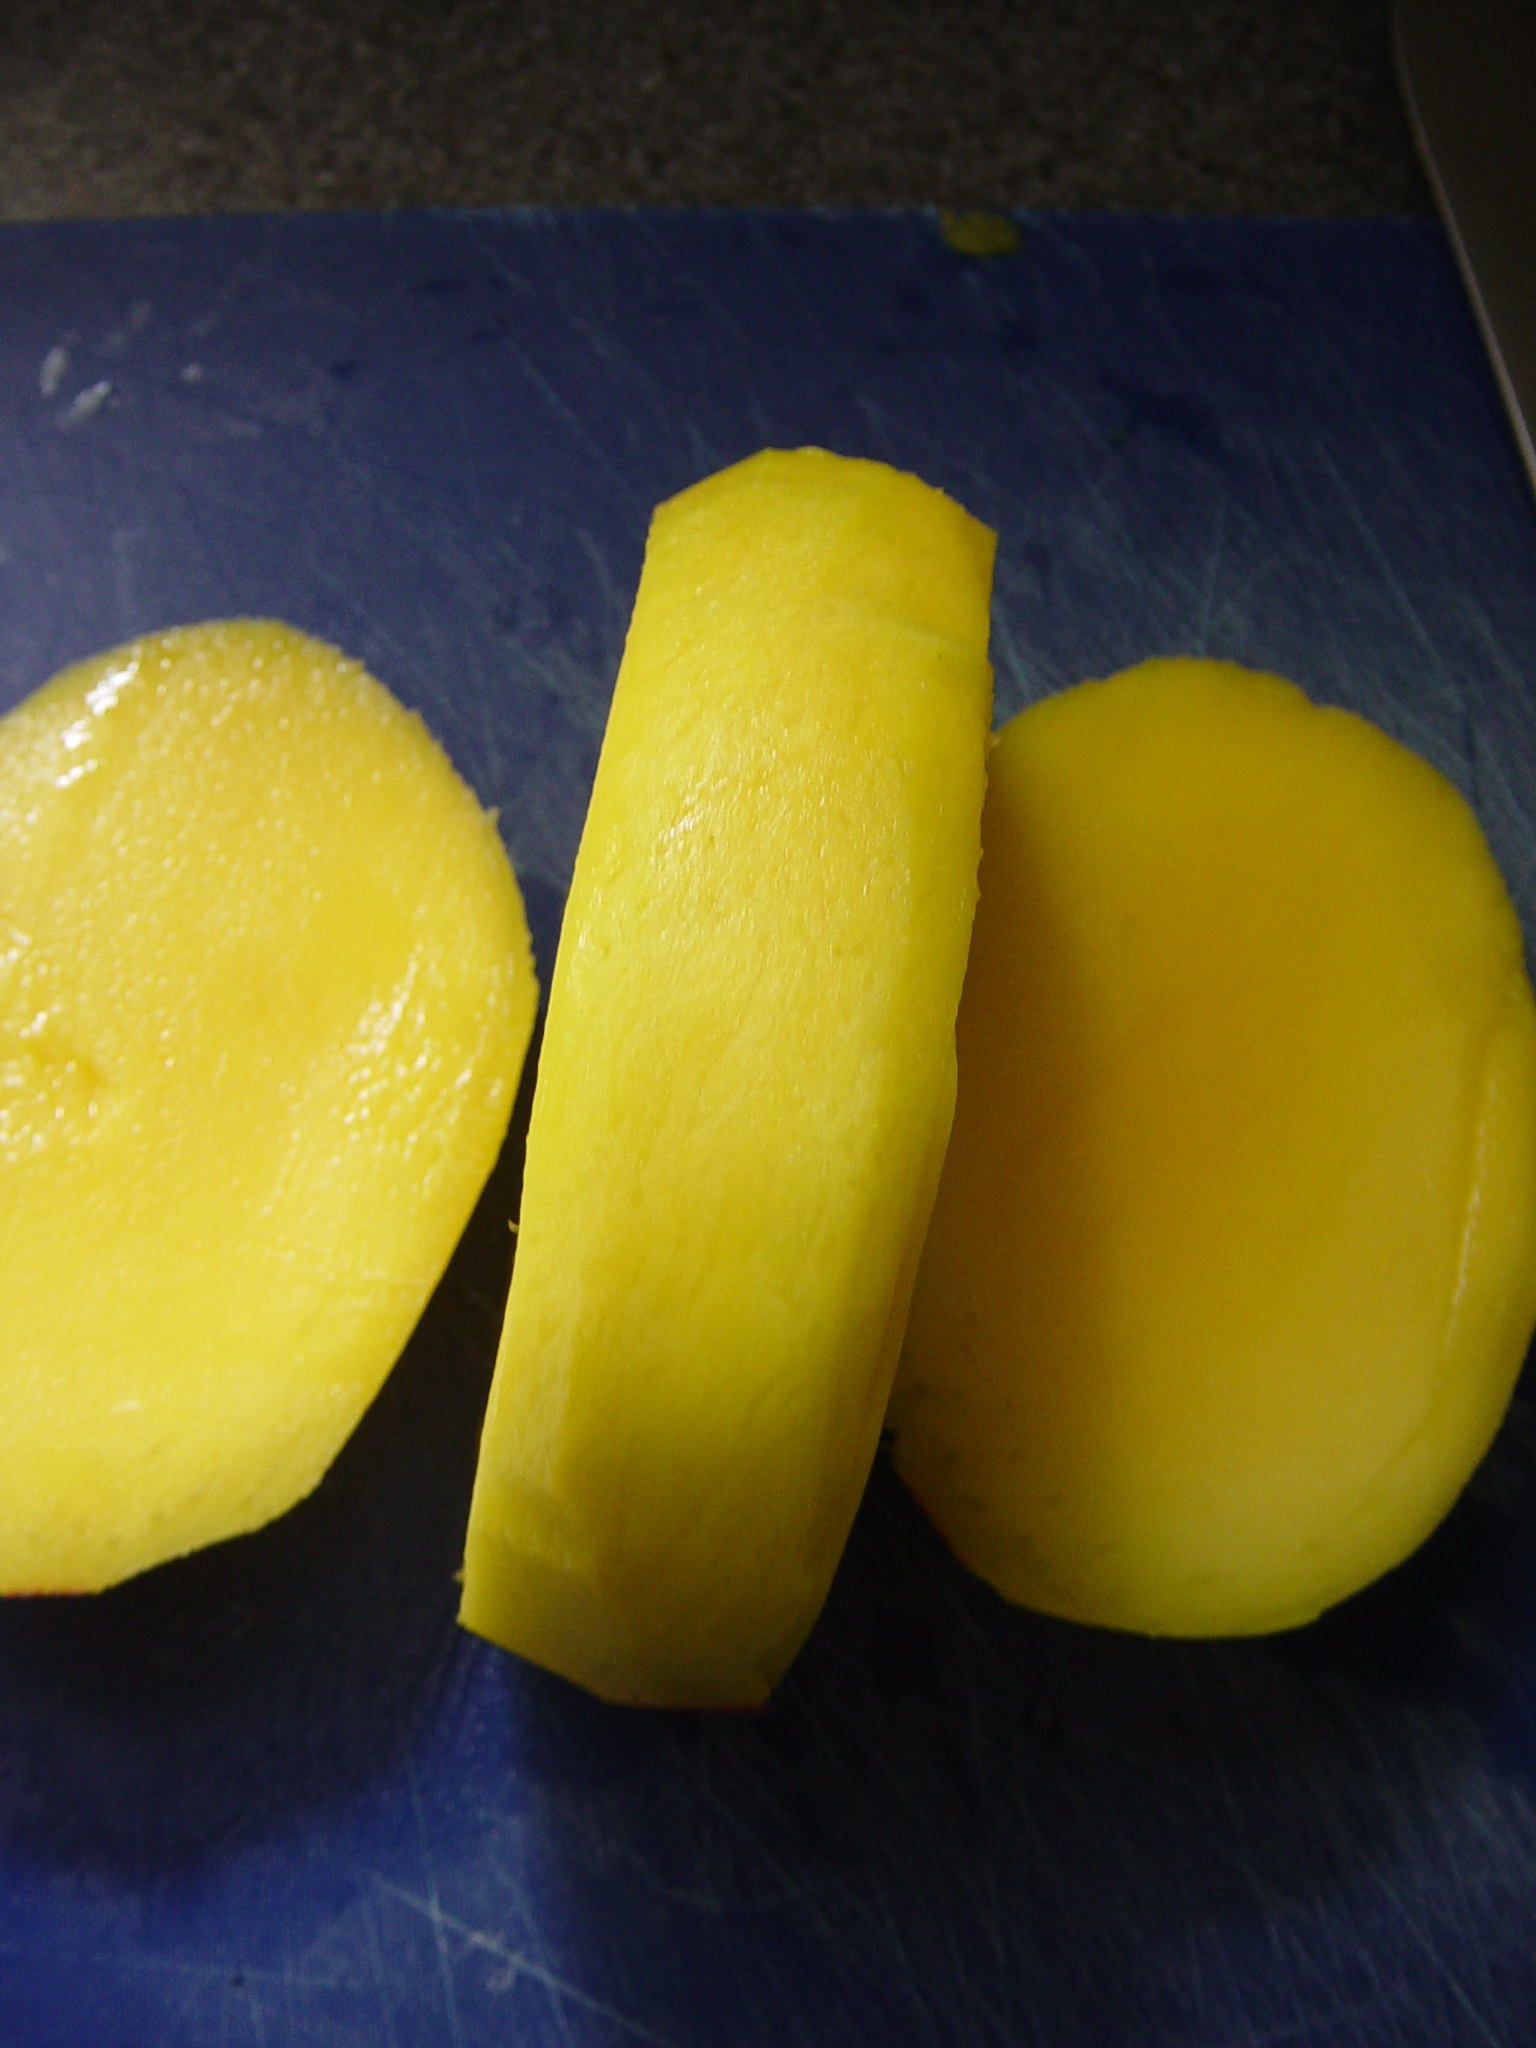 Slicing up a mango